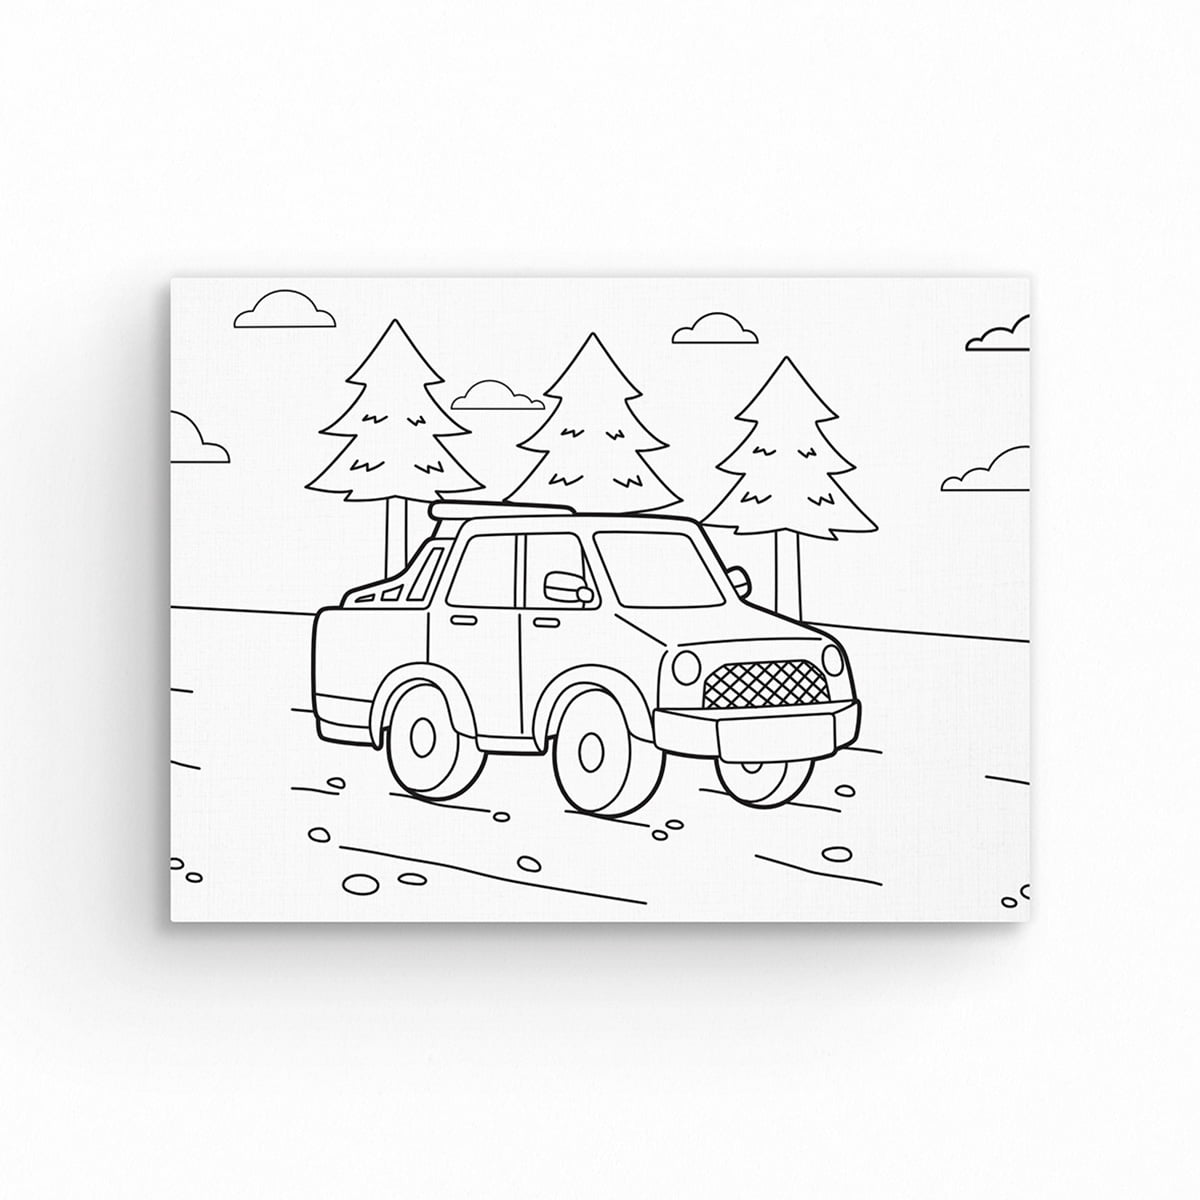 50 Desenhos de Carros para Colorir/Pintar!